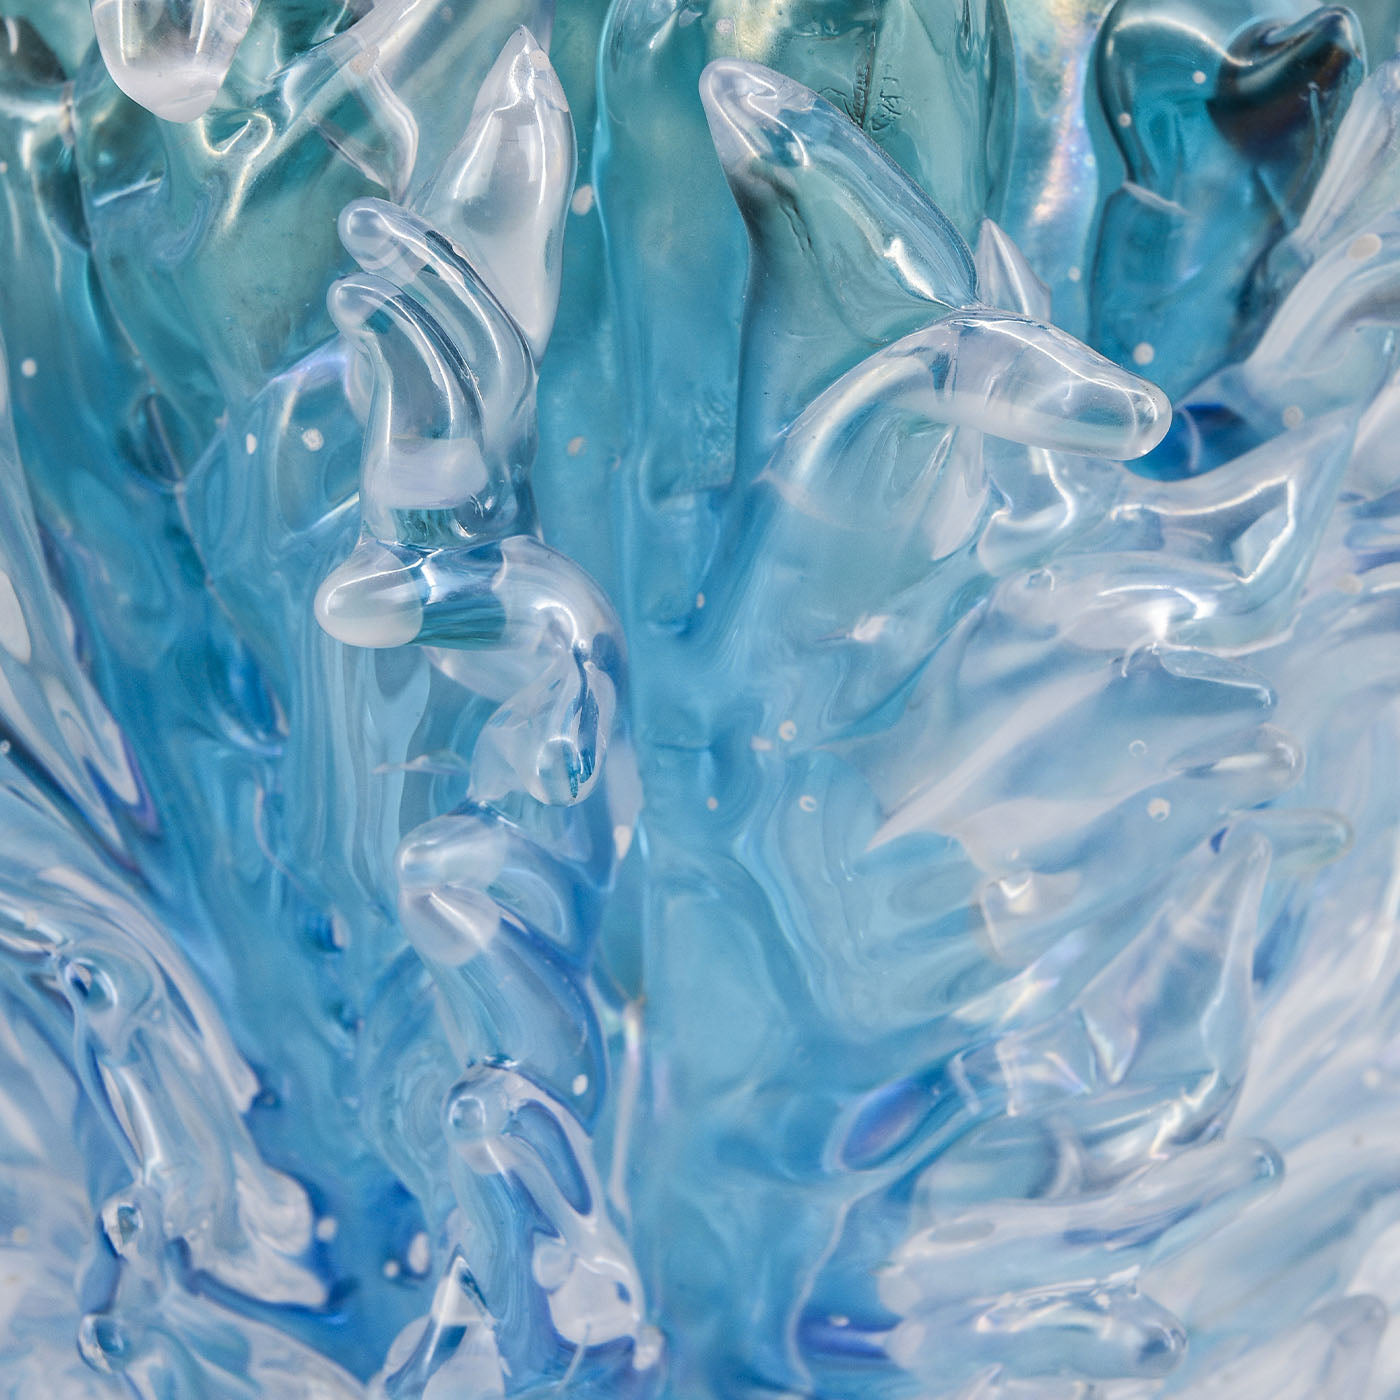 Plume Blue & Transparent Vase - Alternative view 2